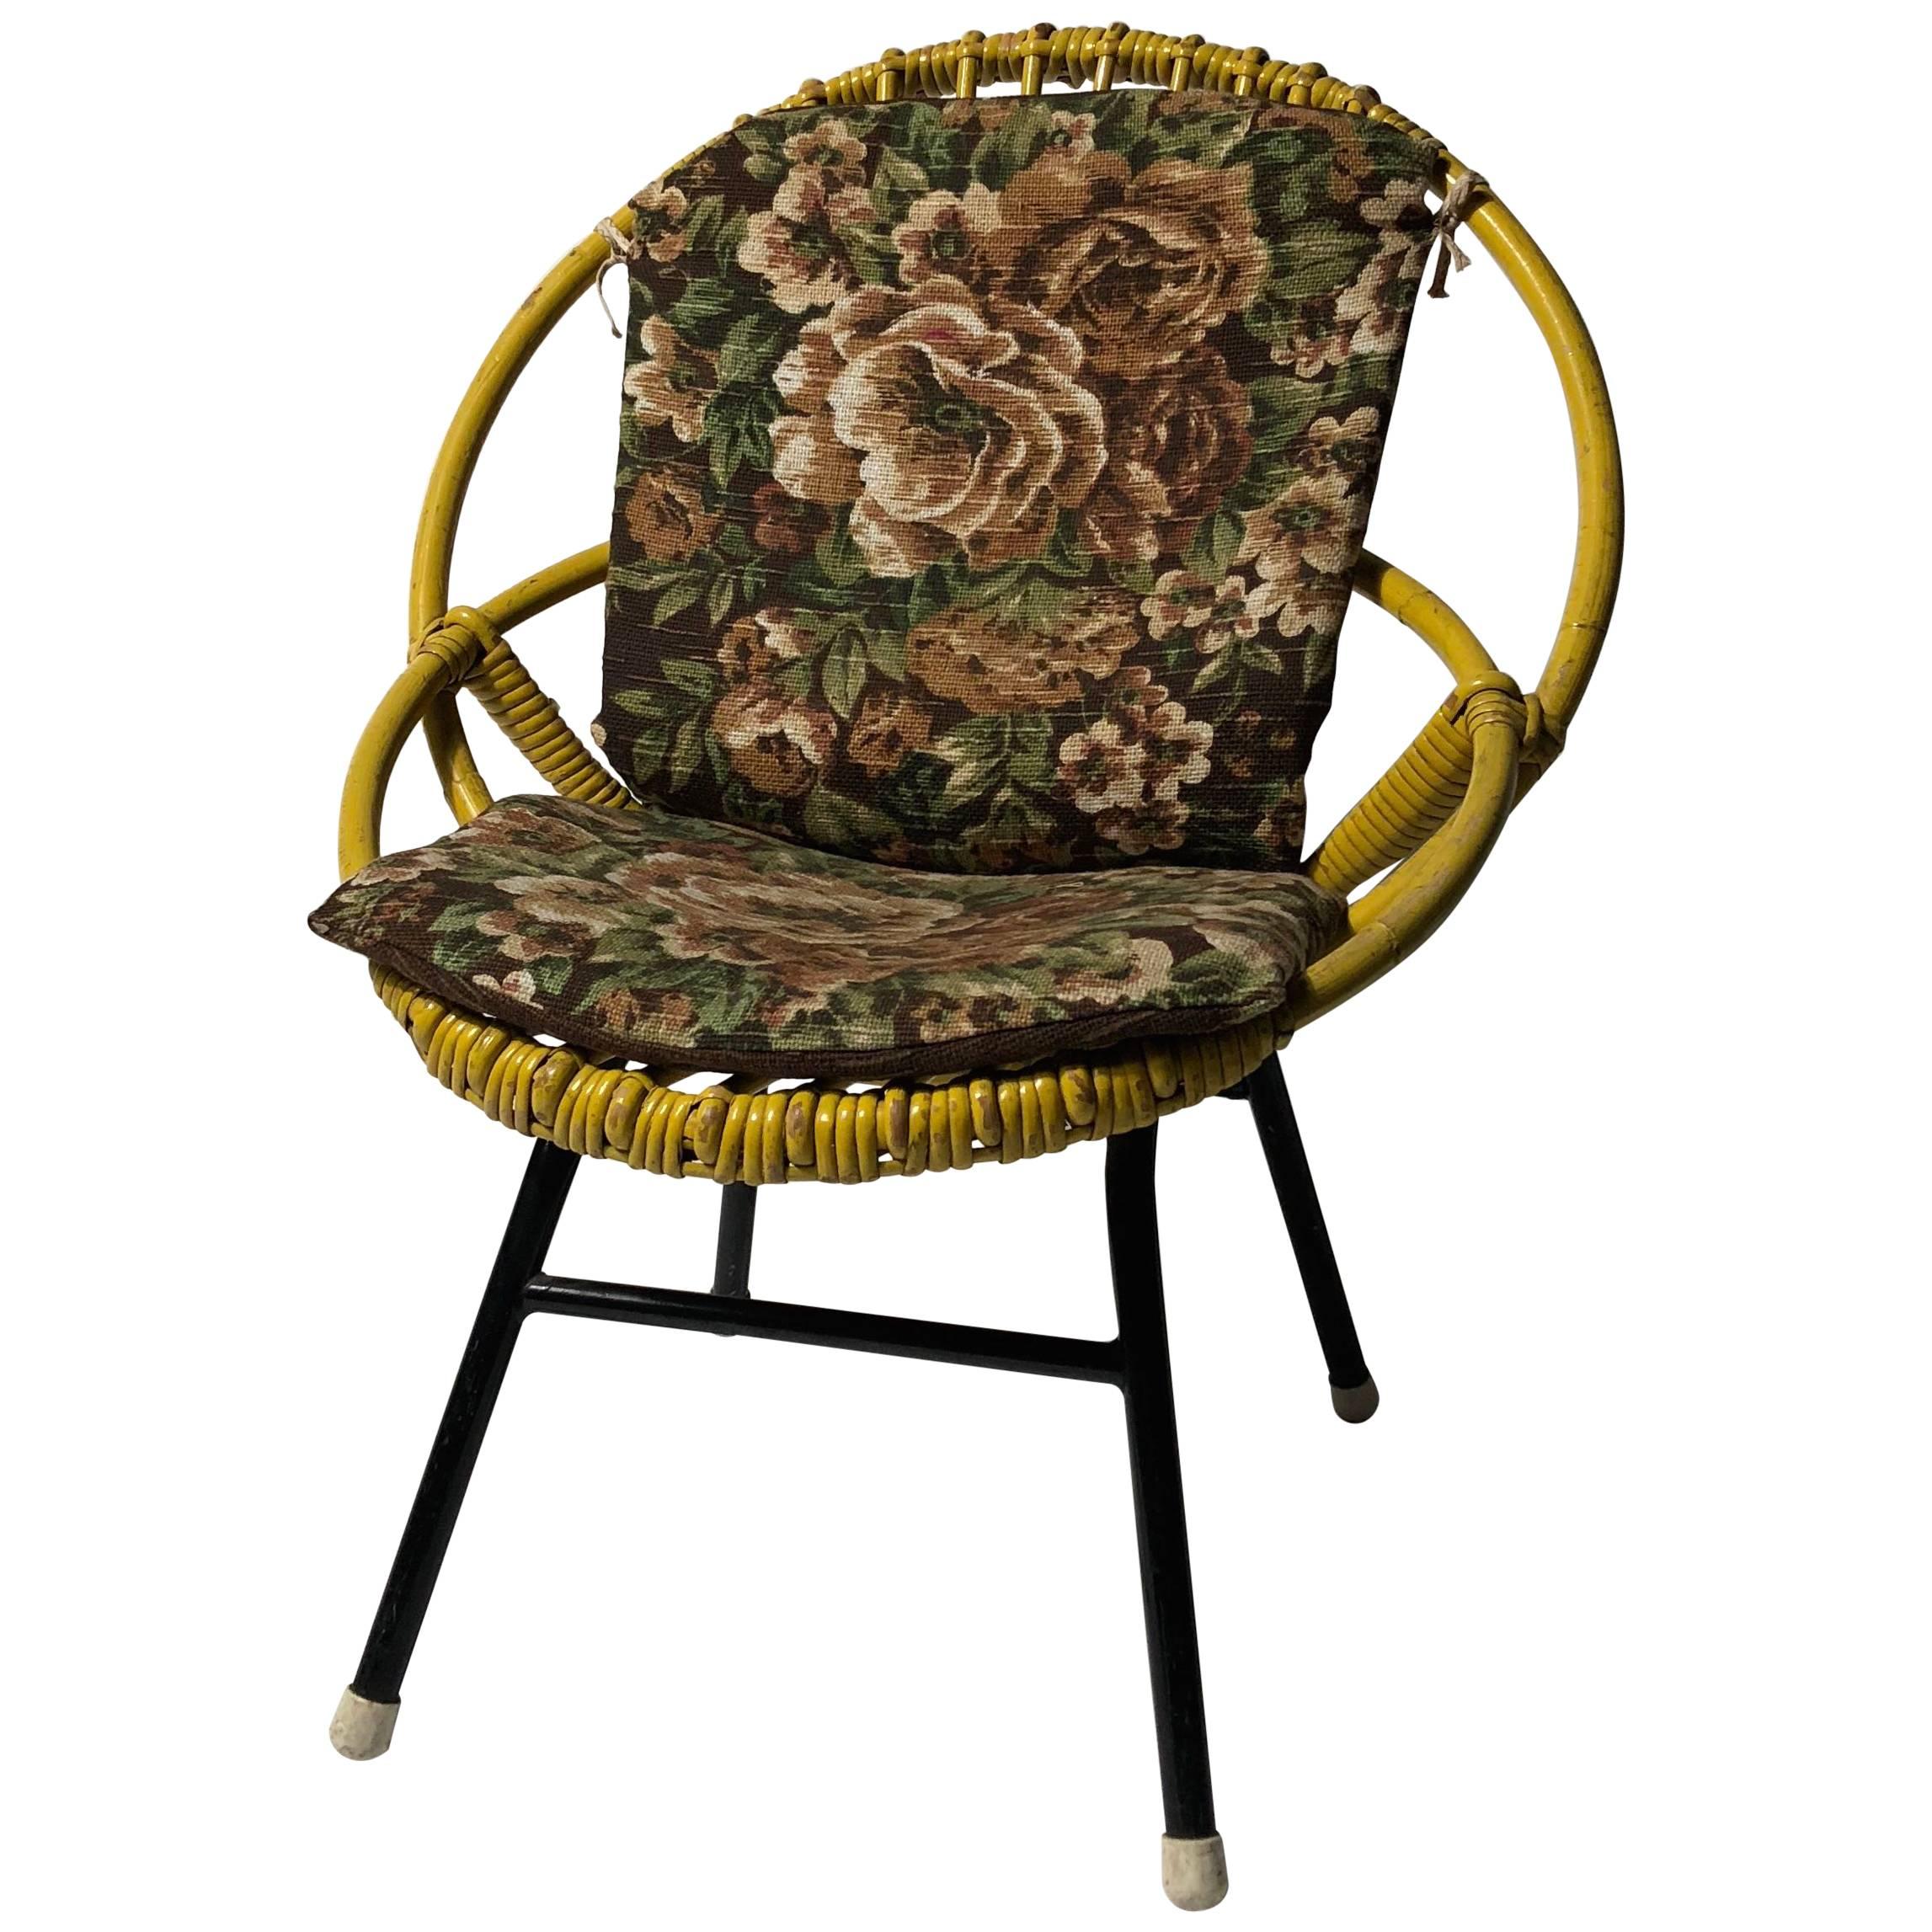 Rohé Noordwolde Children’s Chair 1950s Original Paint and Cushion For Sale